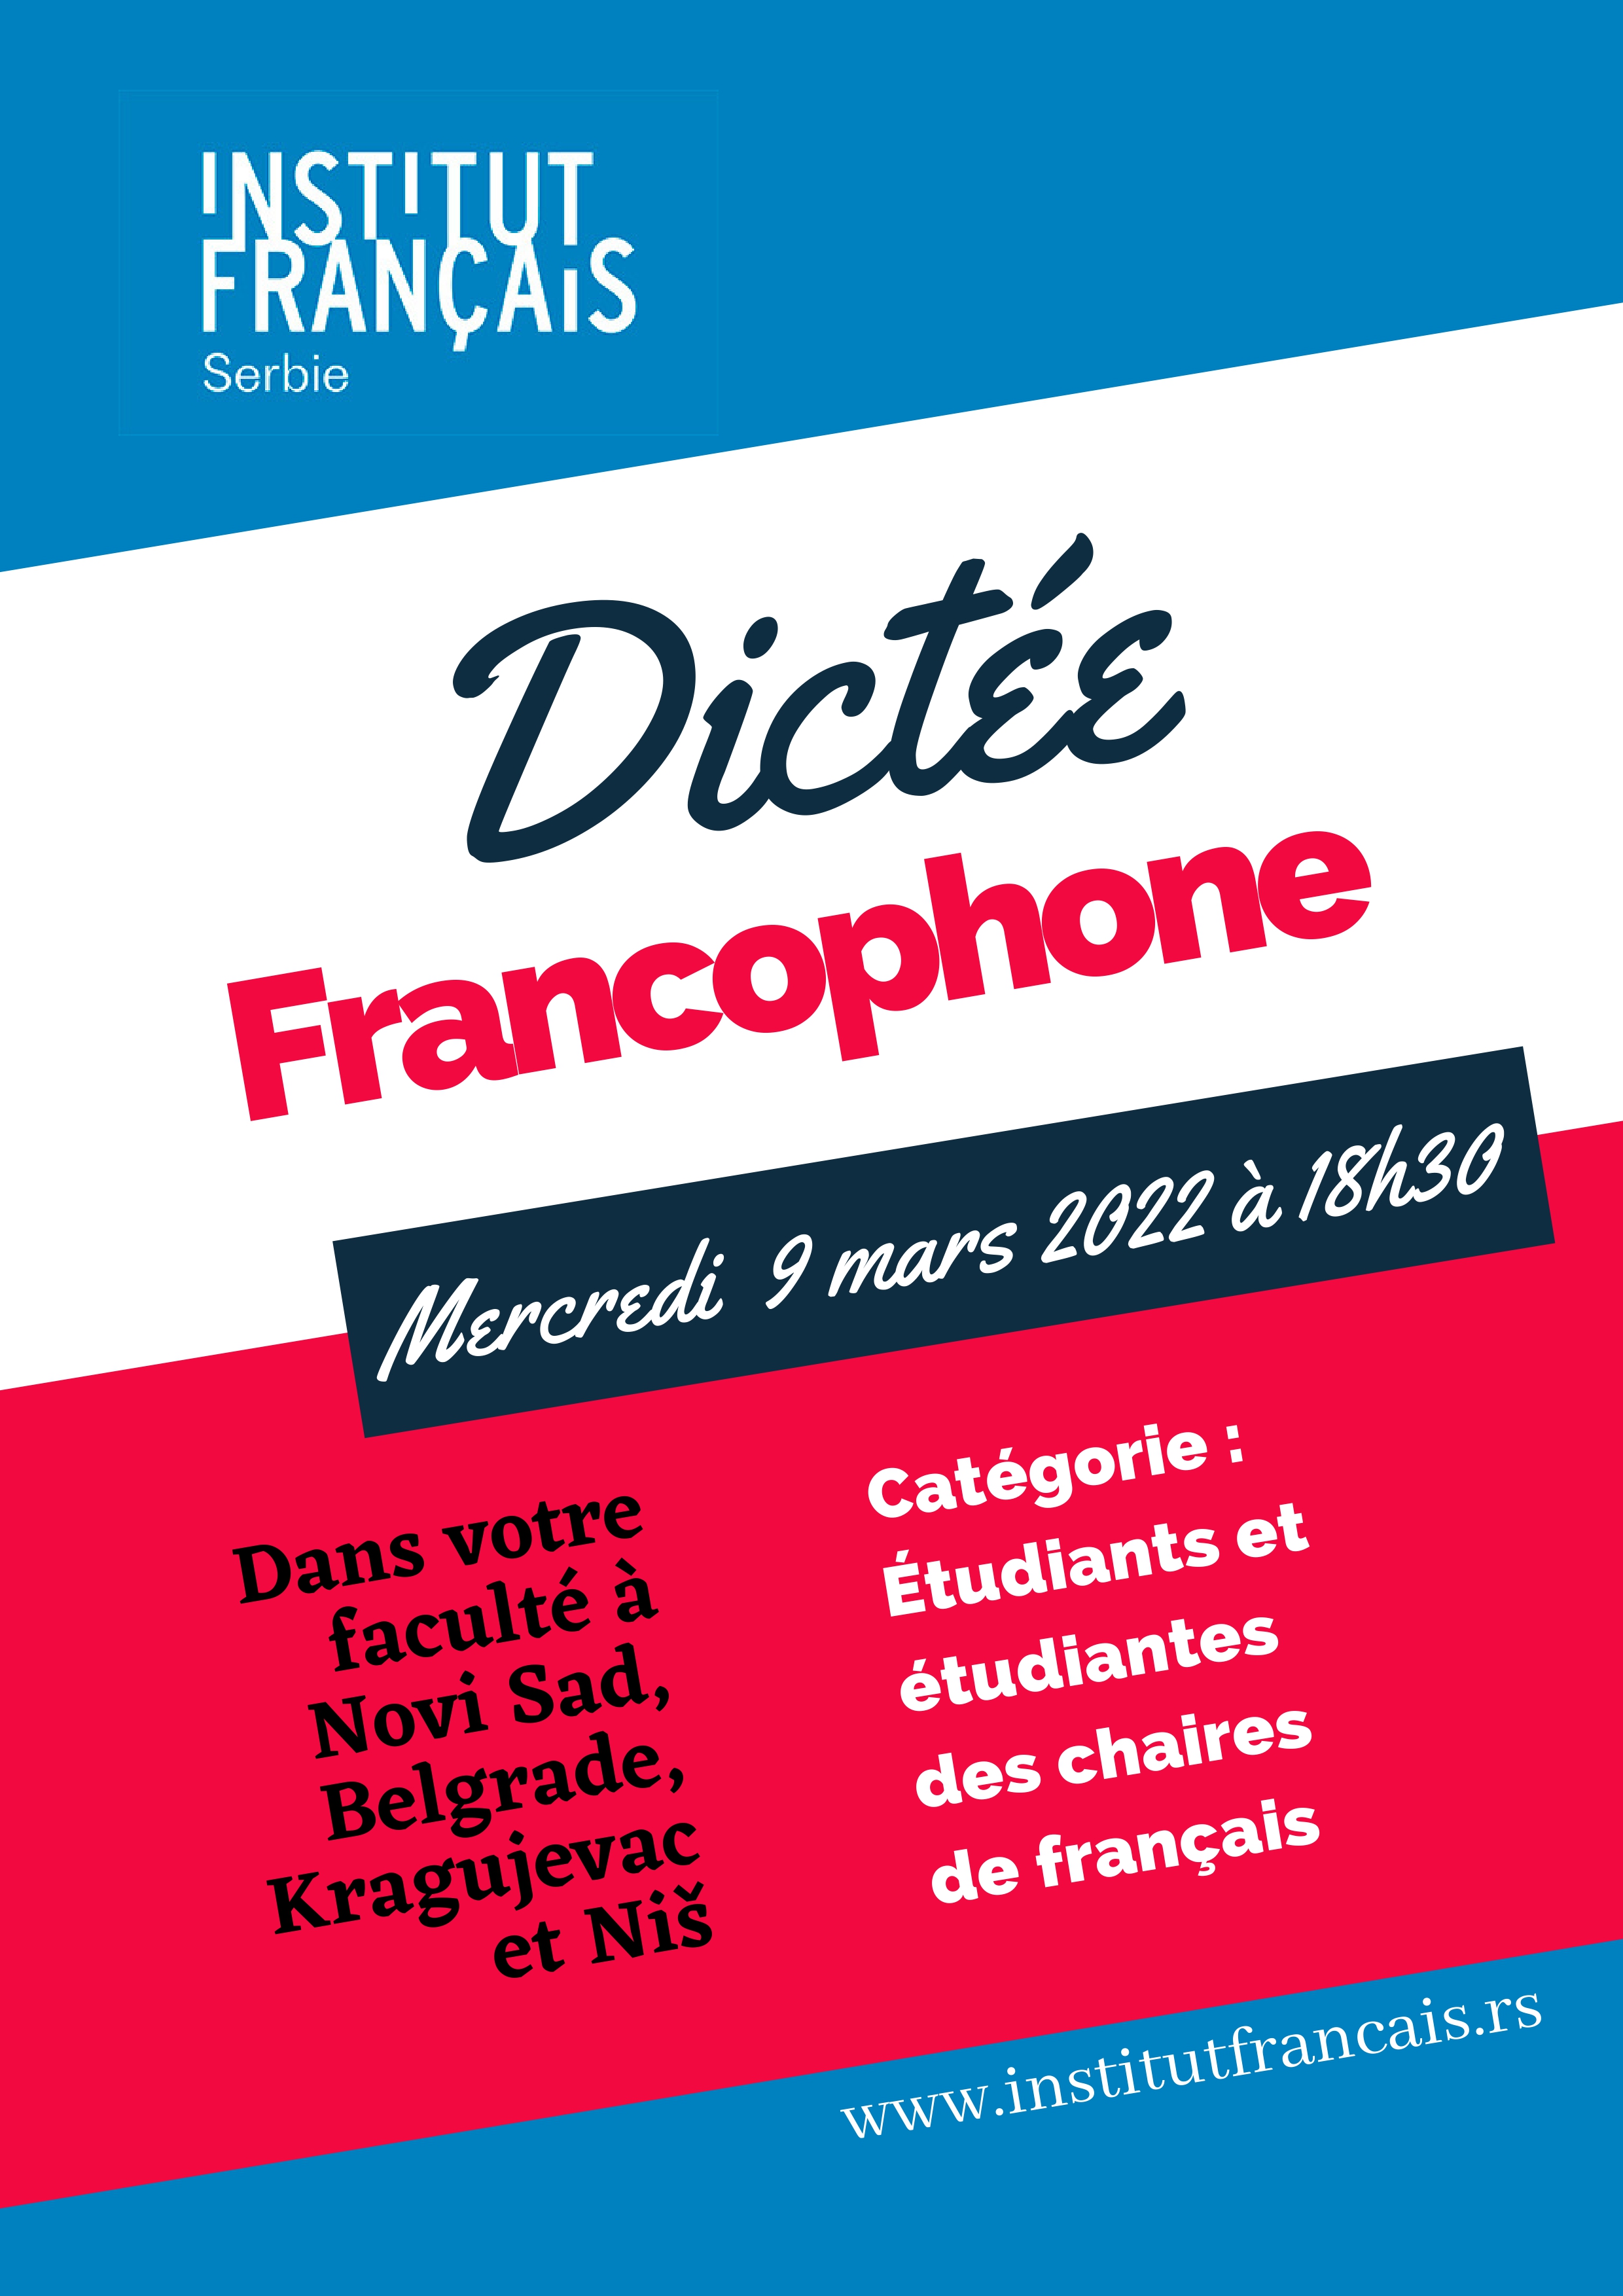 Affiche dictée francophone 2022 druga verzija samo jedna kategorija studenti 1 page 0001